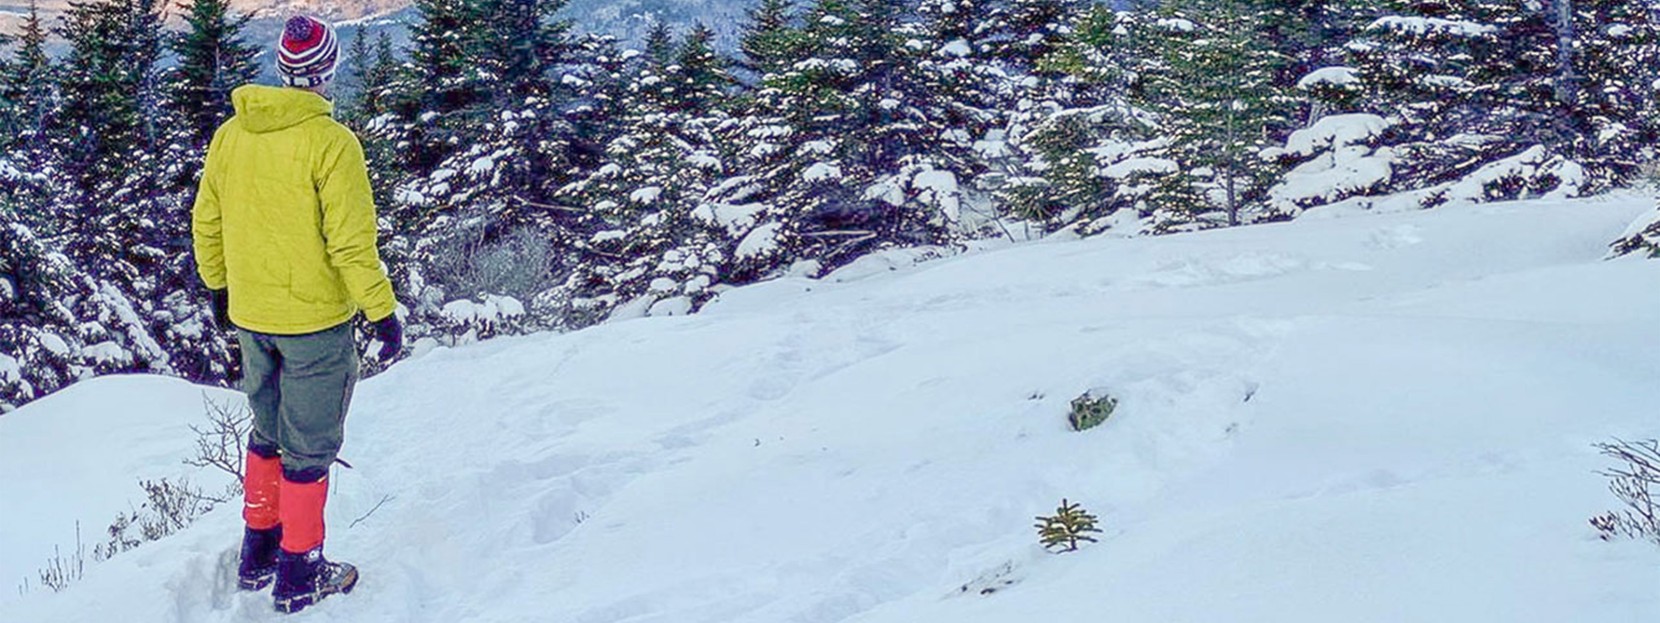 Dan Tarkinson on a mountainside in winter, enjoying the view.